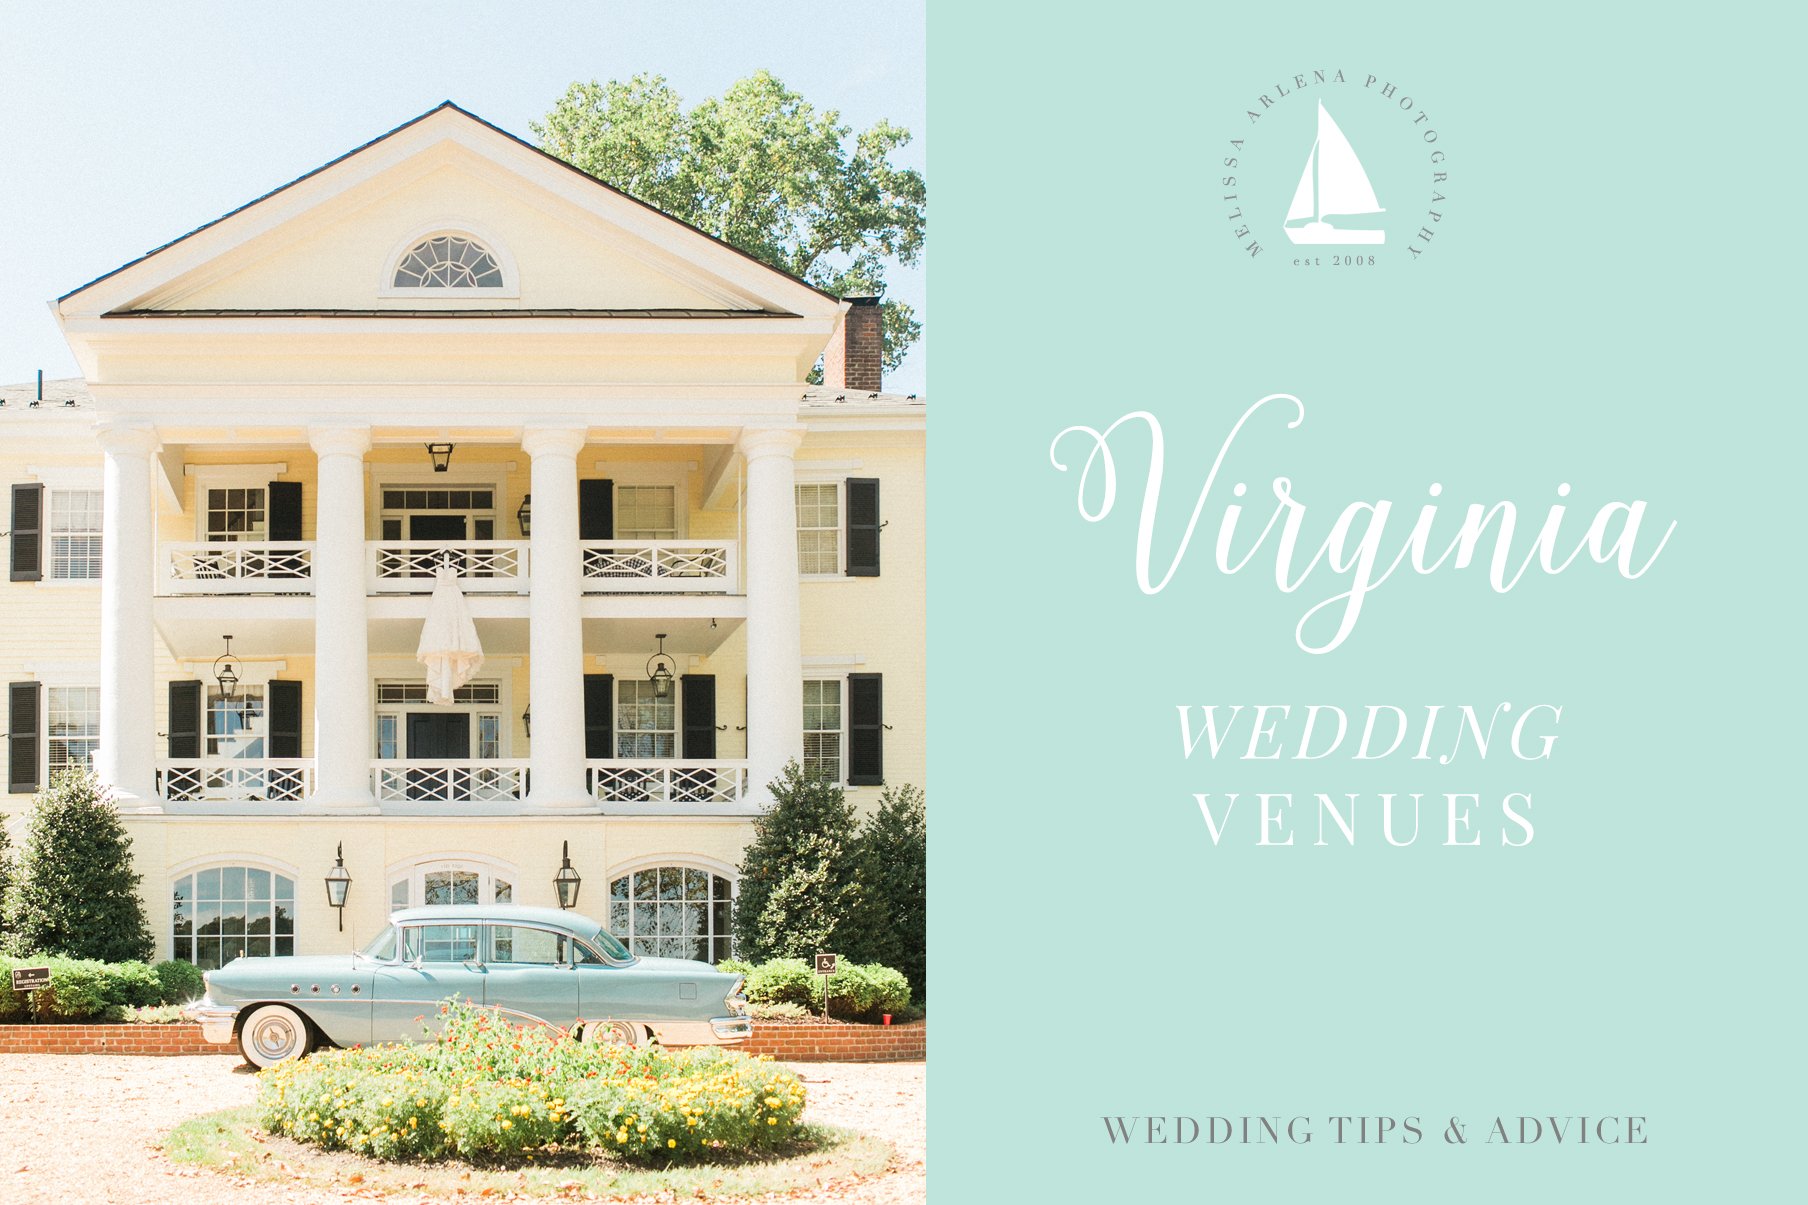  Virginia  Wedding  Venues  Newborn Photography Northern  Va  